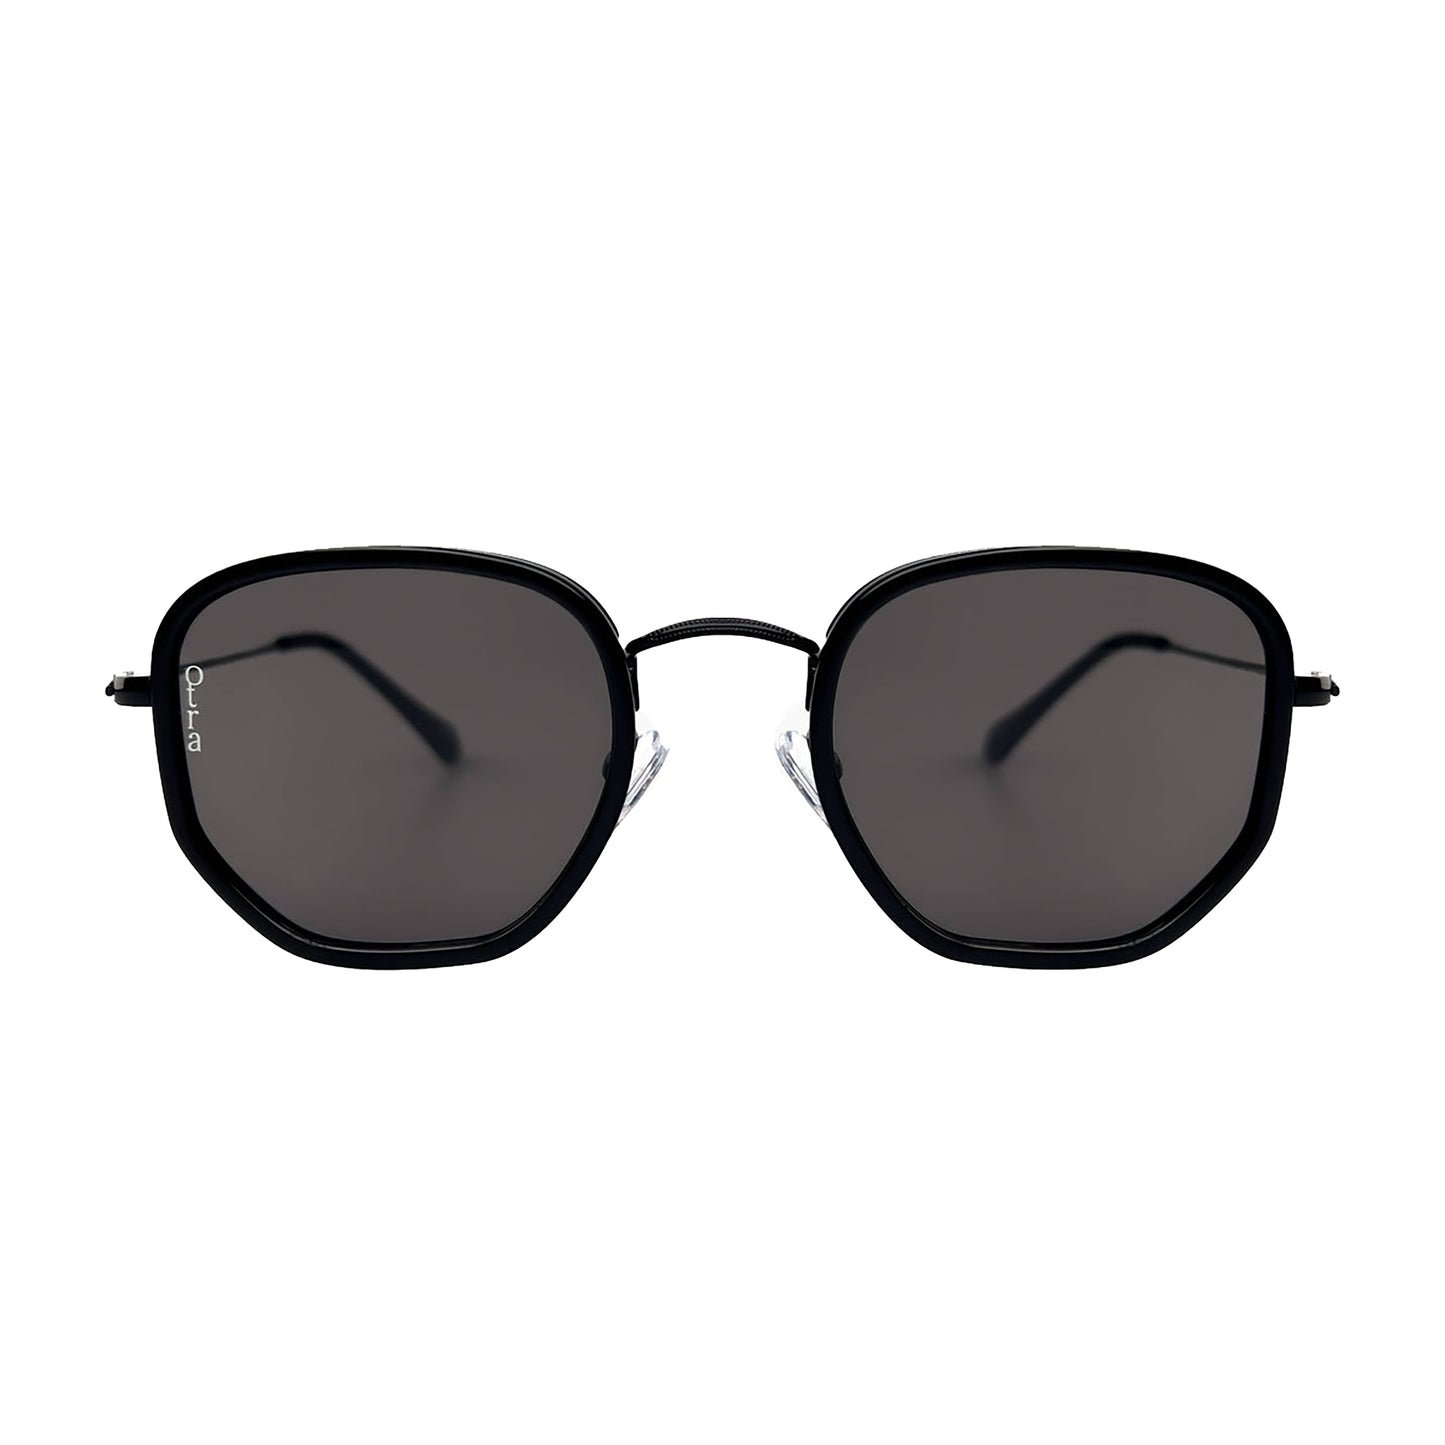 Otra Eyewear Tate Sunglasses